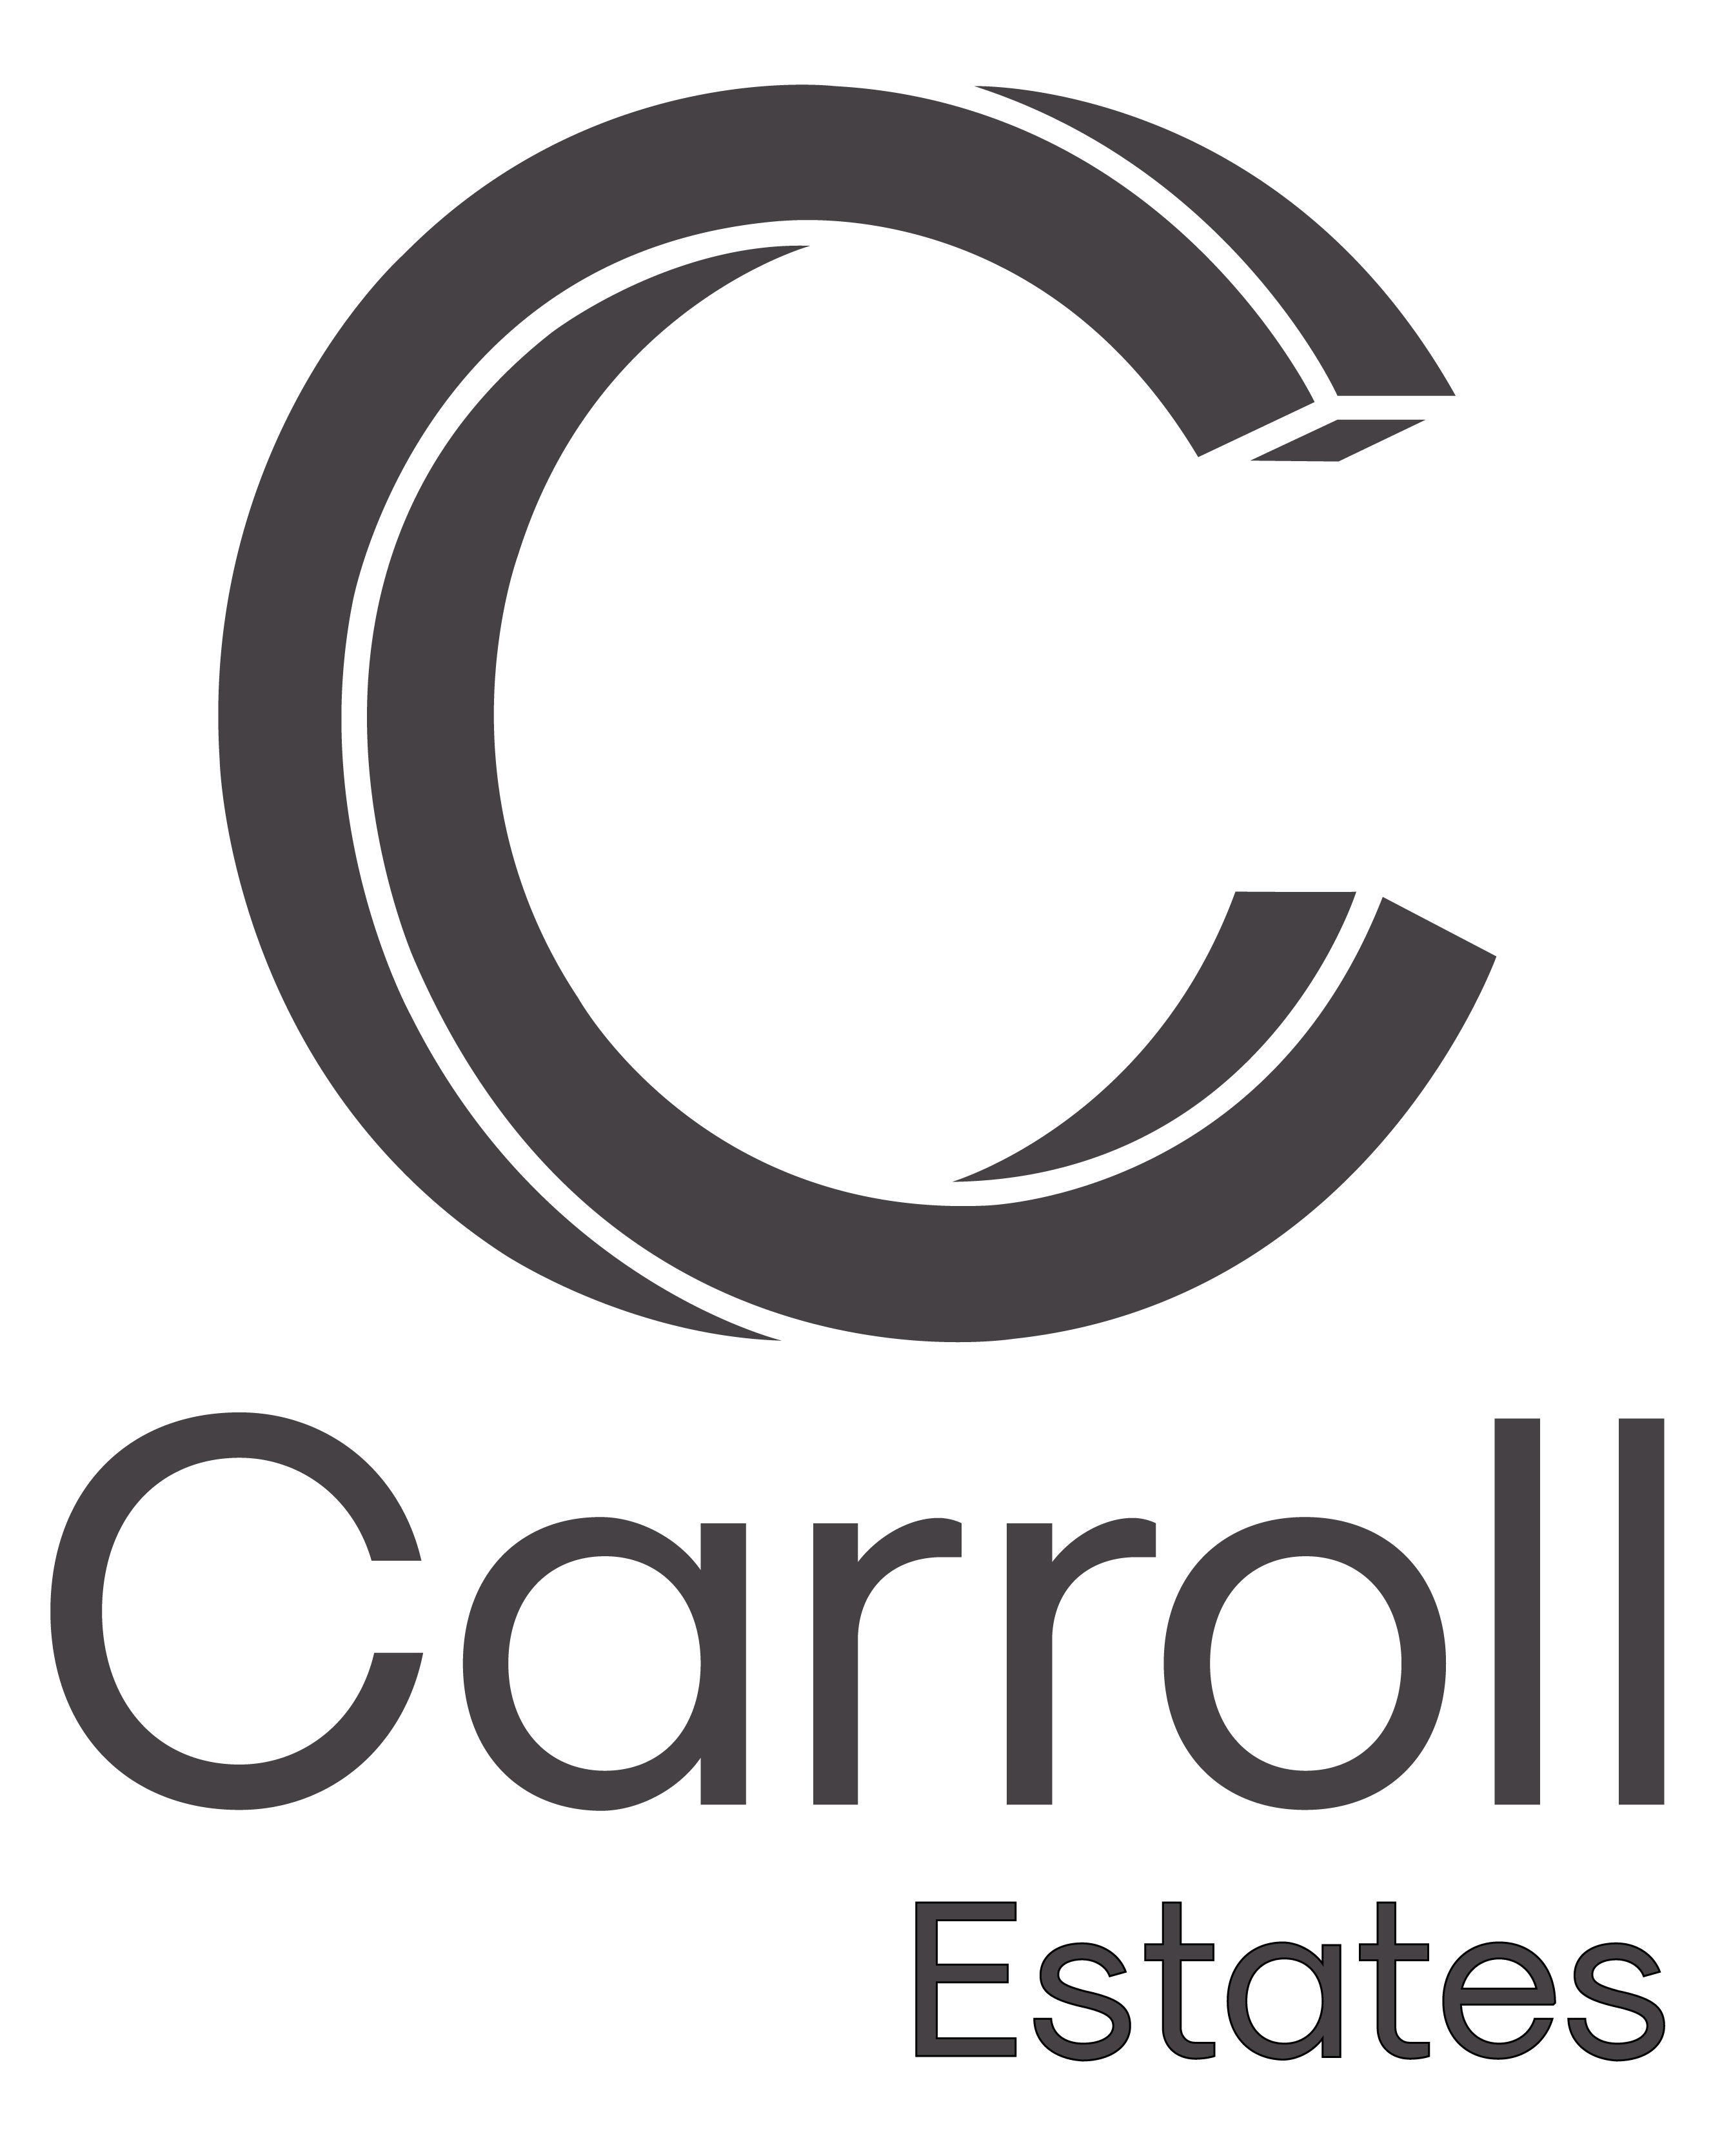 Carroll-Estates-Logo-grey_website-01